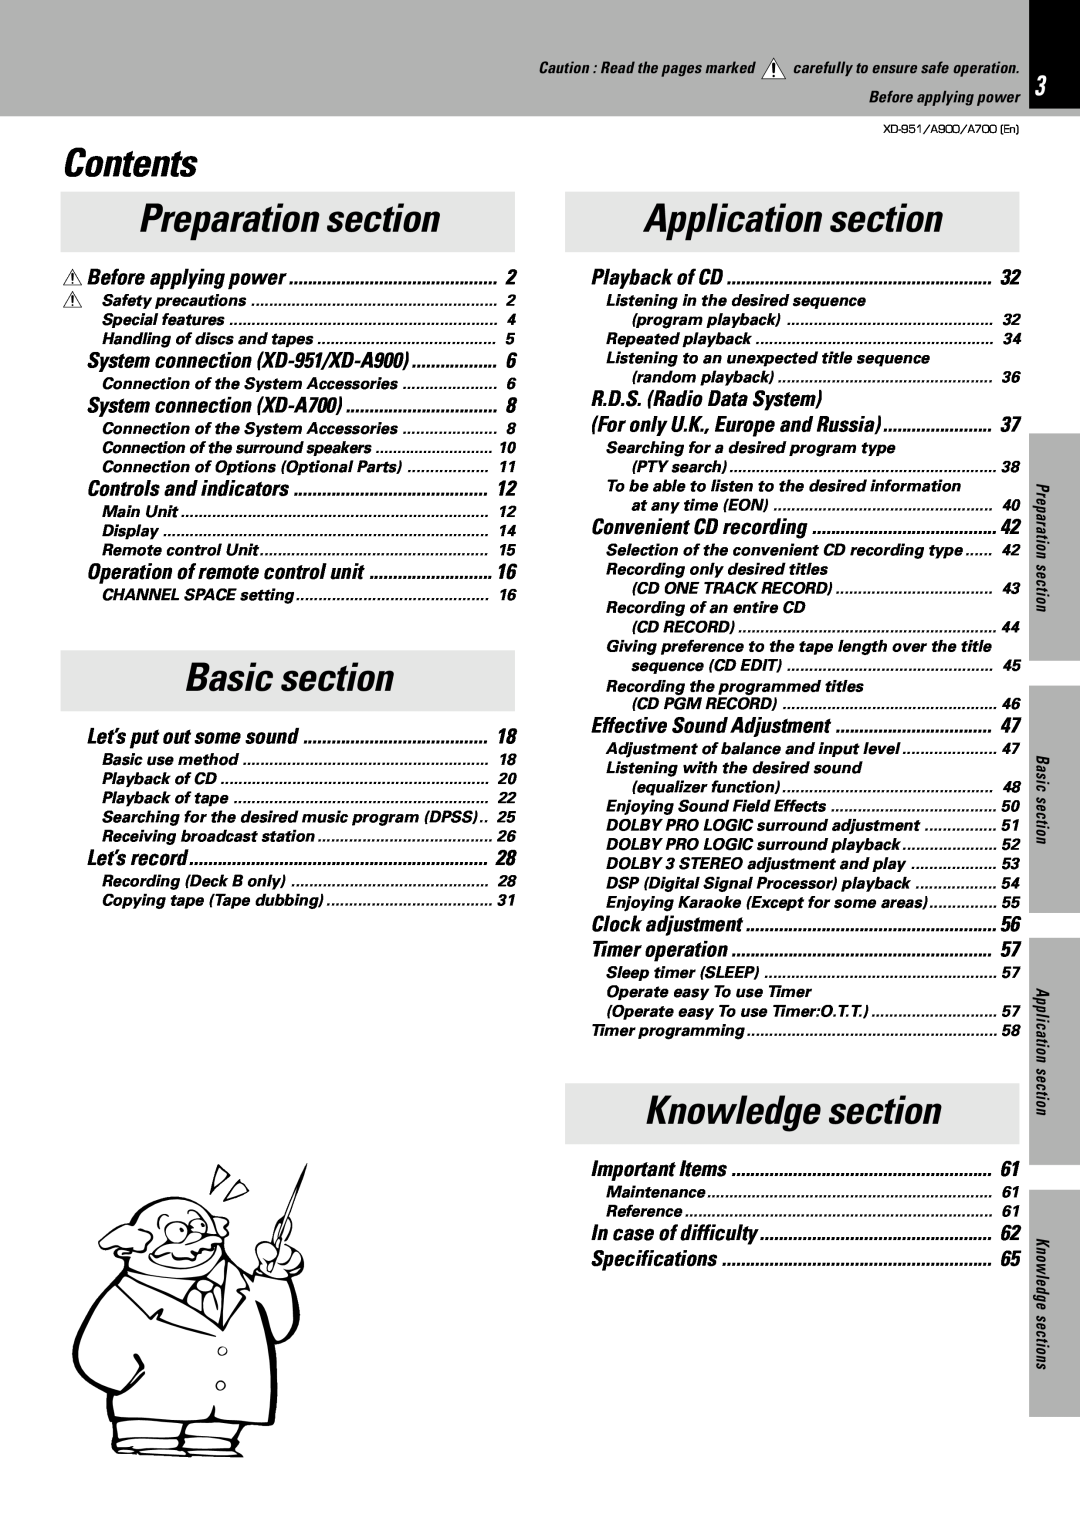 Kenwood XD-951 Contents, Basic section, Application section, Knowledge section, Preparation section, Clock adjustment 